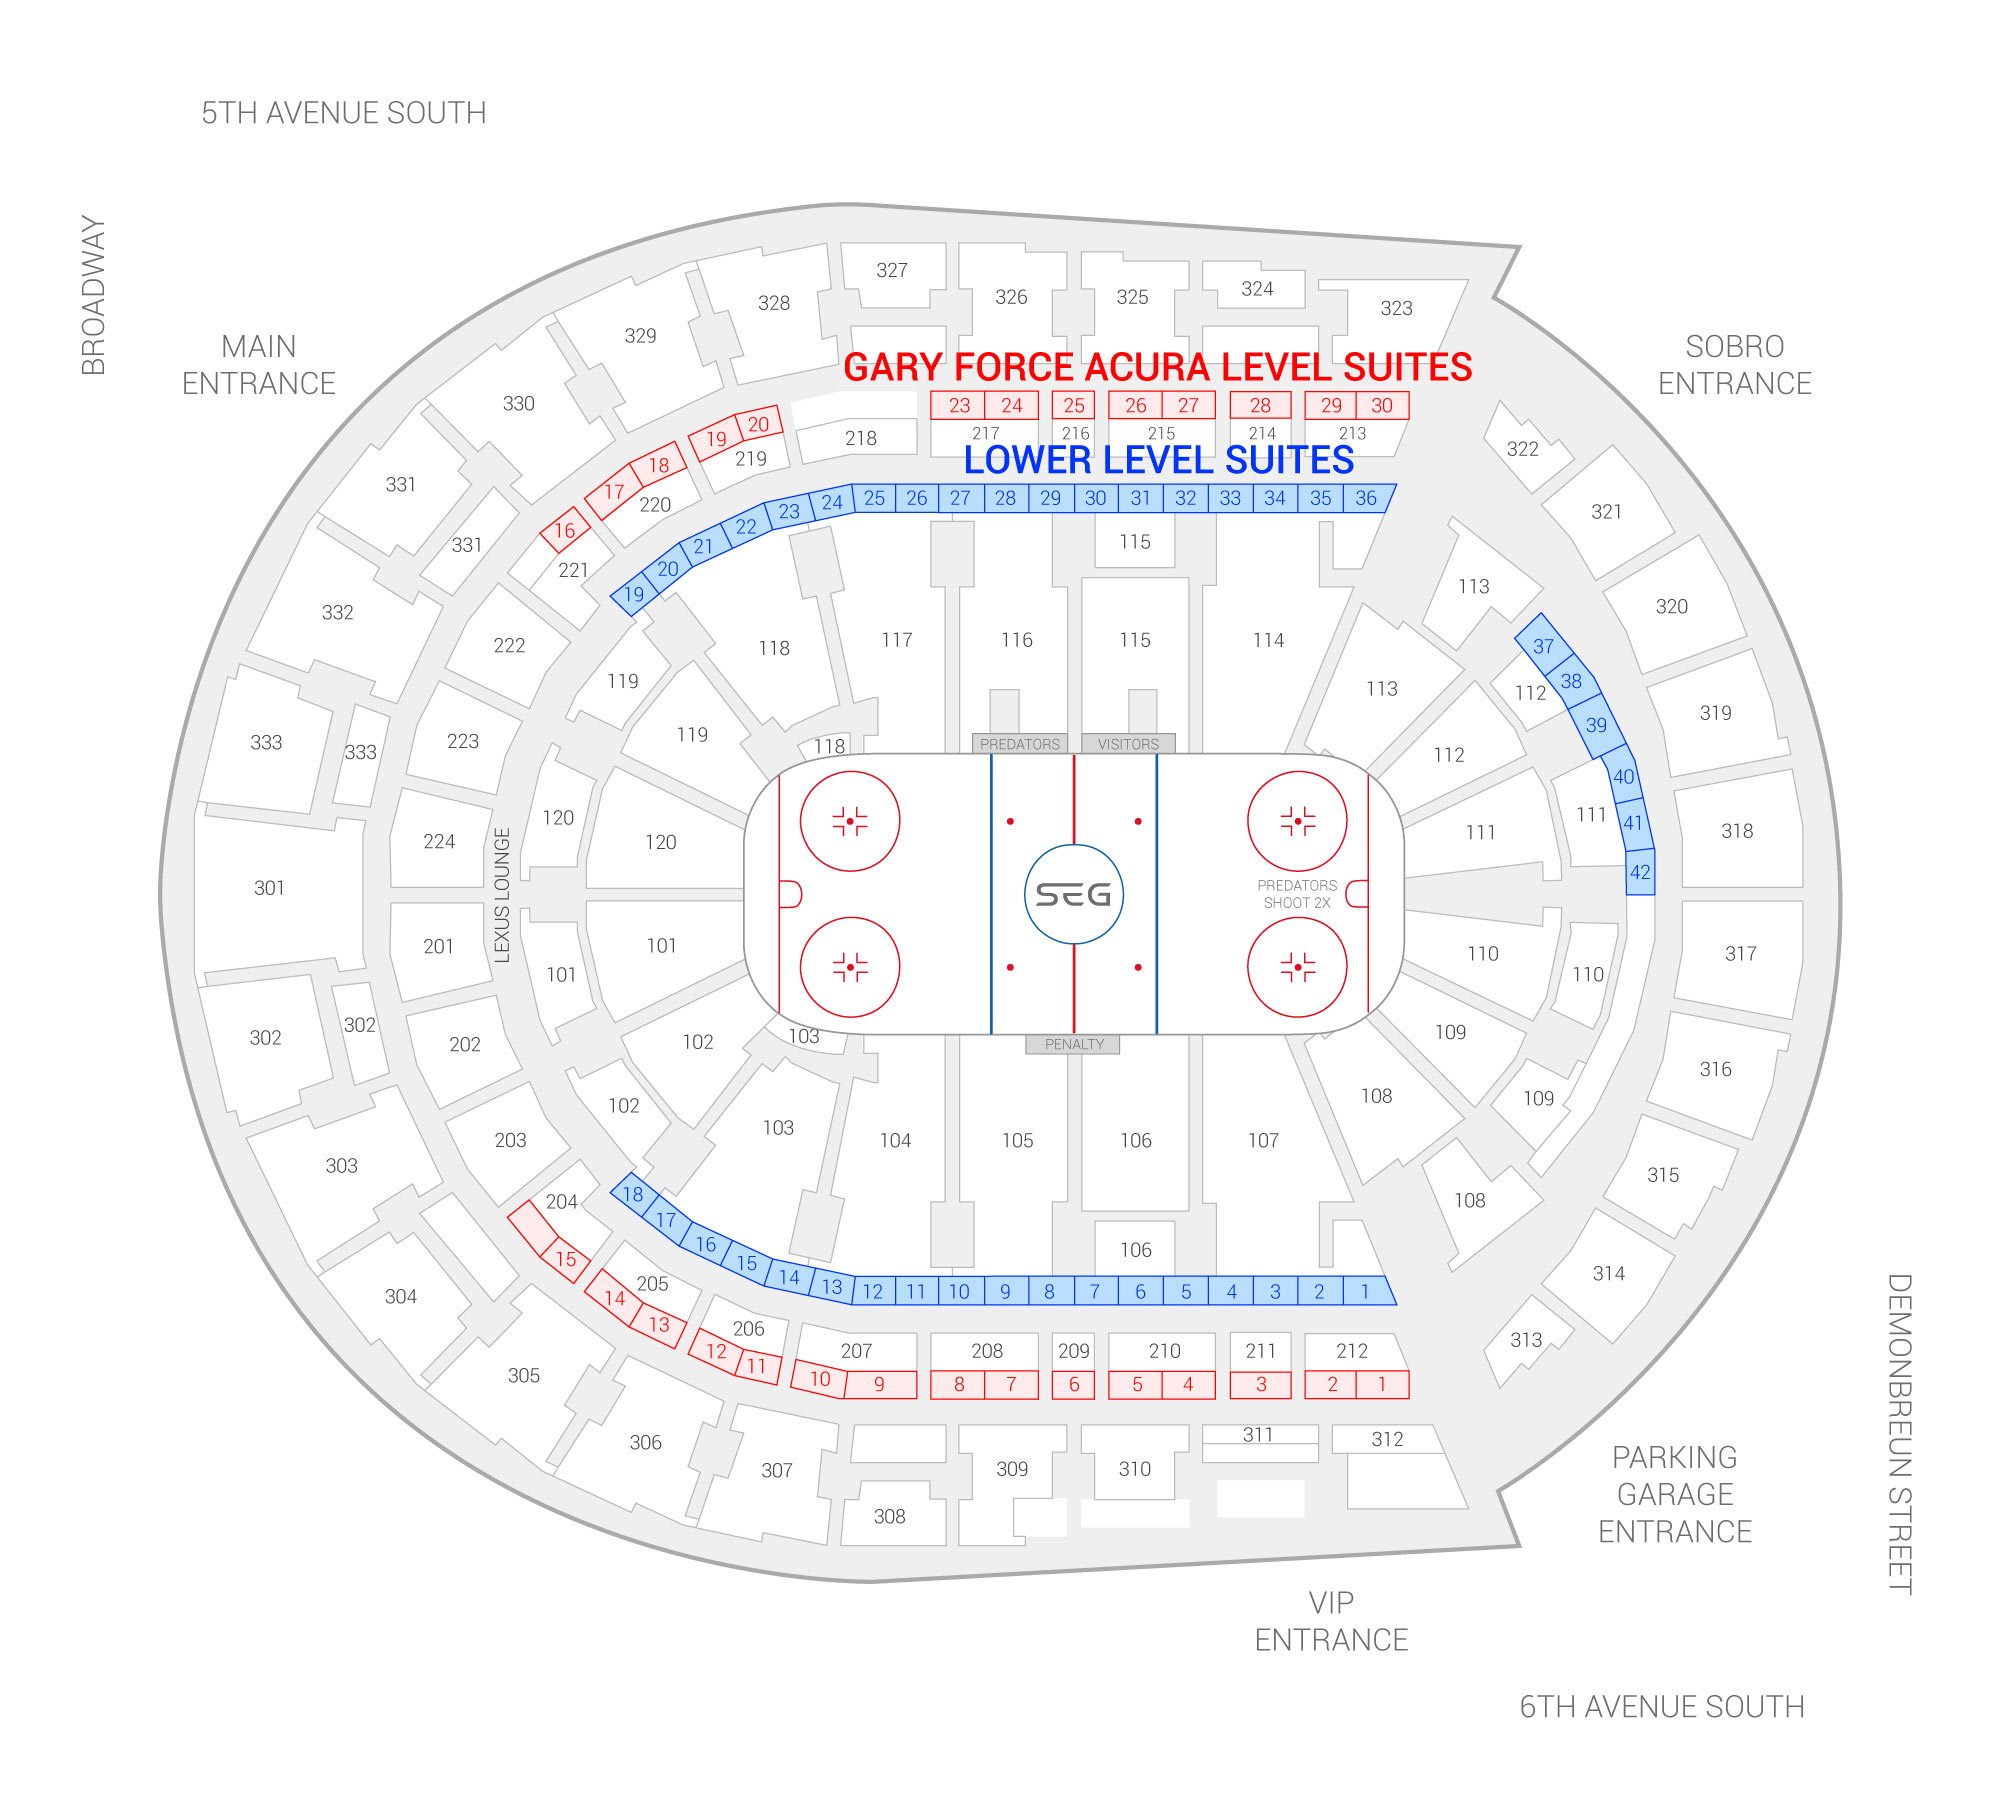 Bridgestone Arena / Nashville Predators Suite Map and Seating Chart